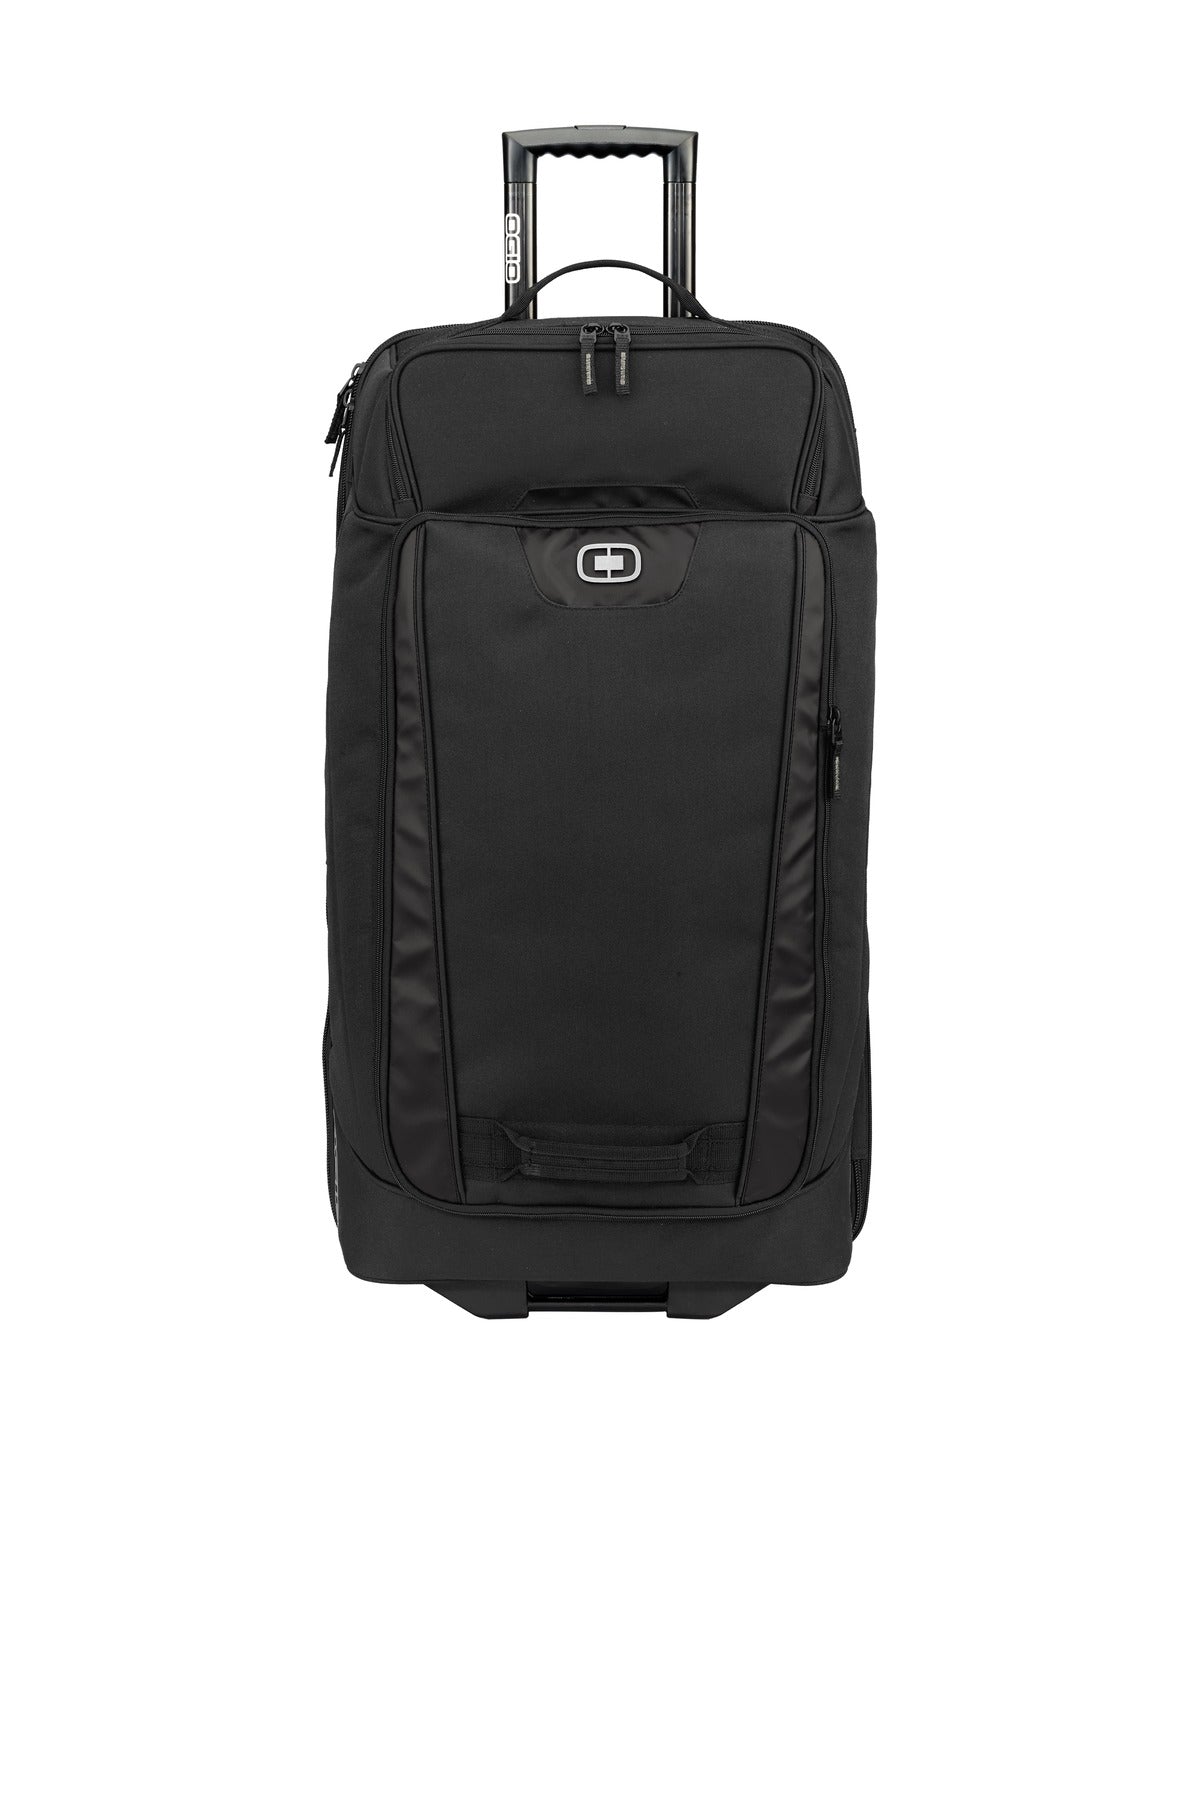 OGIO® Nomad 30 Travel Bag. 413017 - DFW Impression